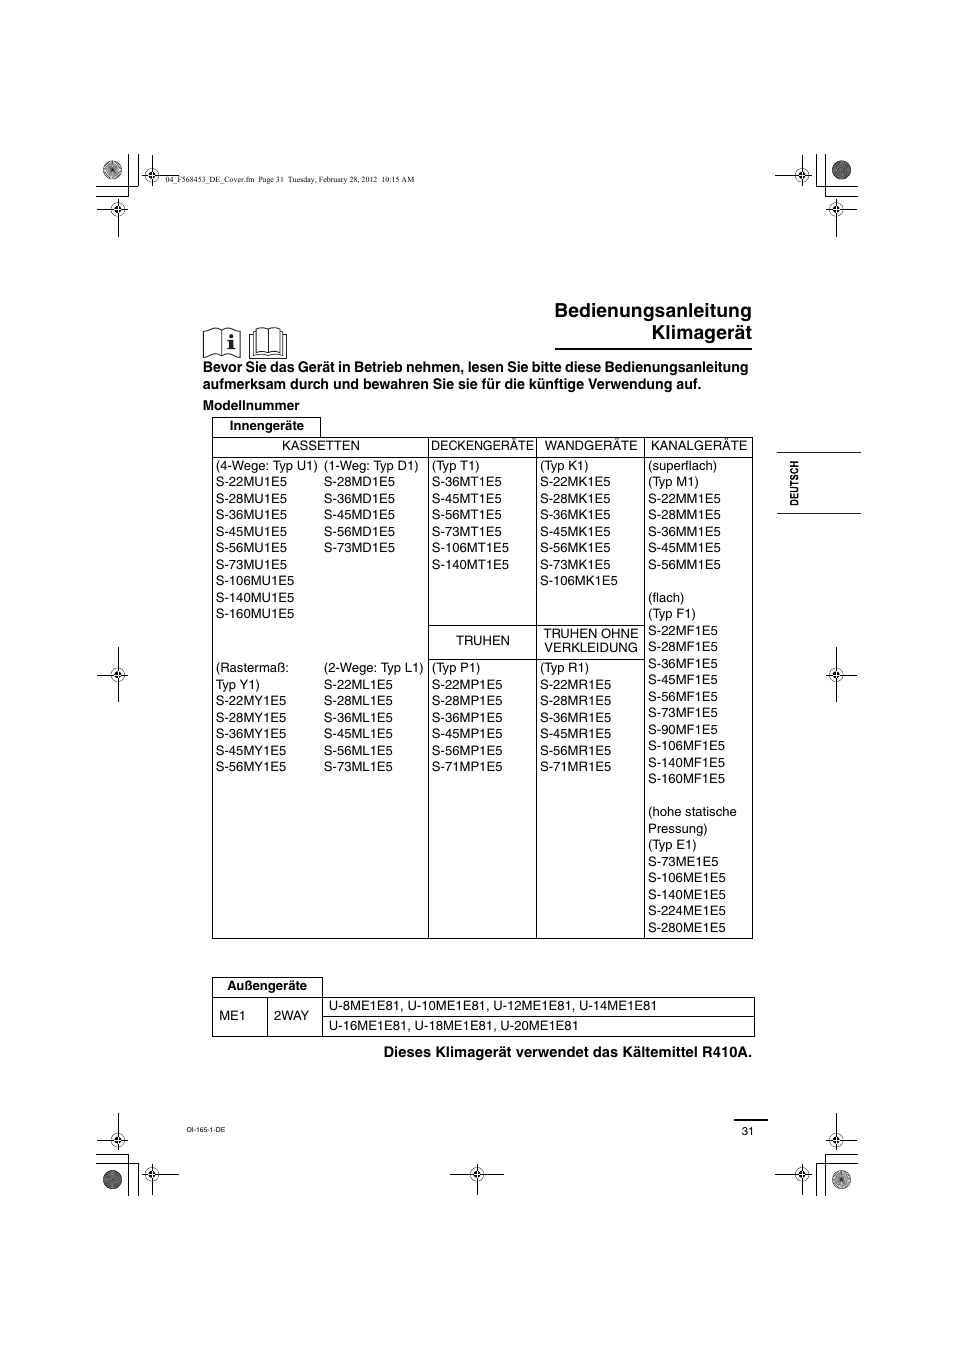 Инструкция по эксплуатации Panasonic U18ME1E81 | 21 cтраница